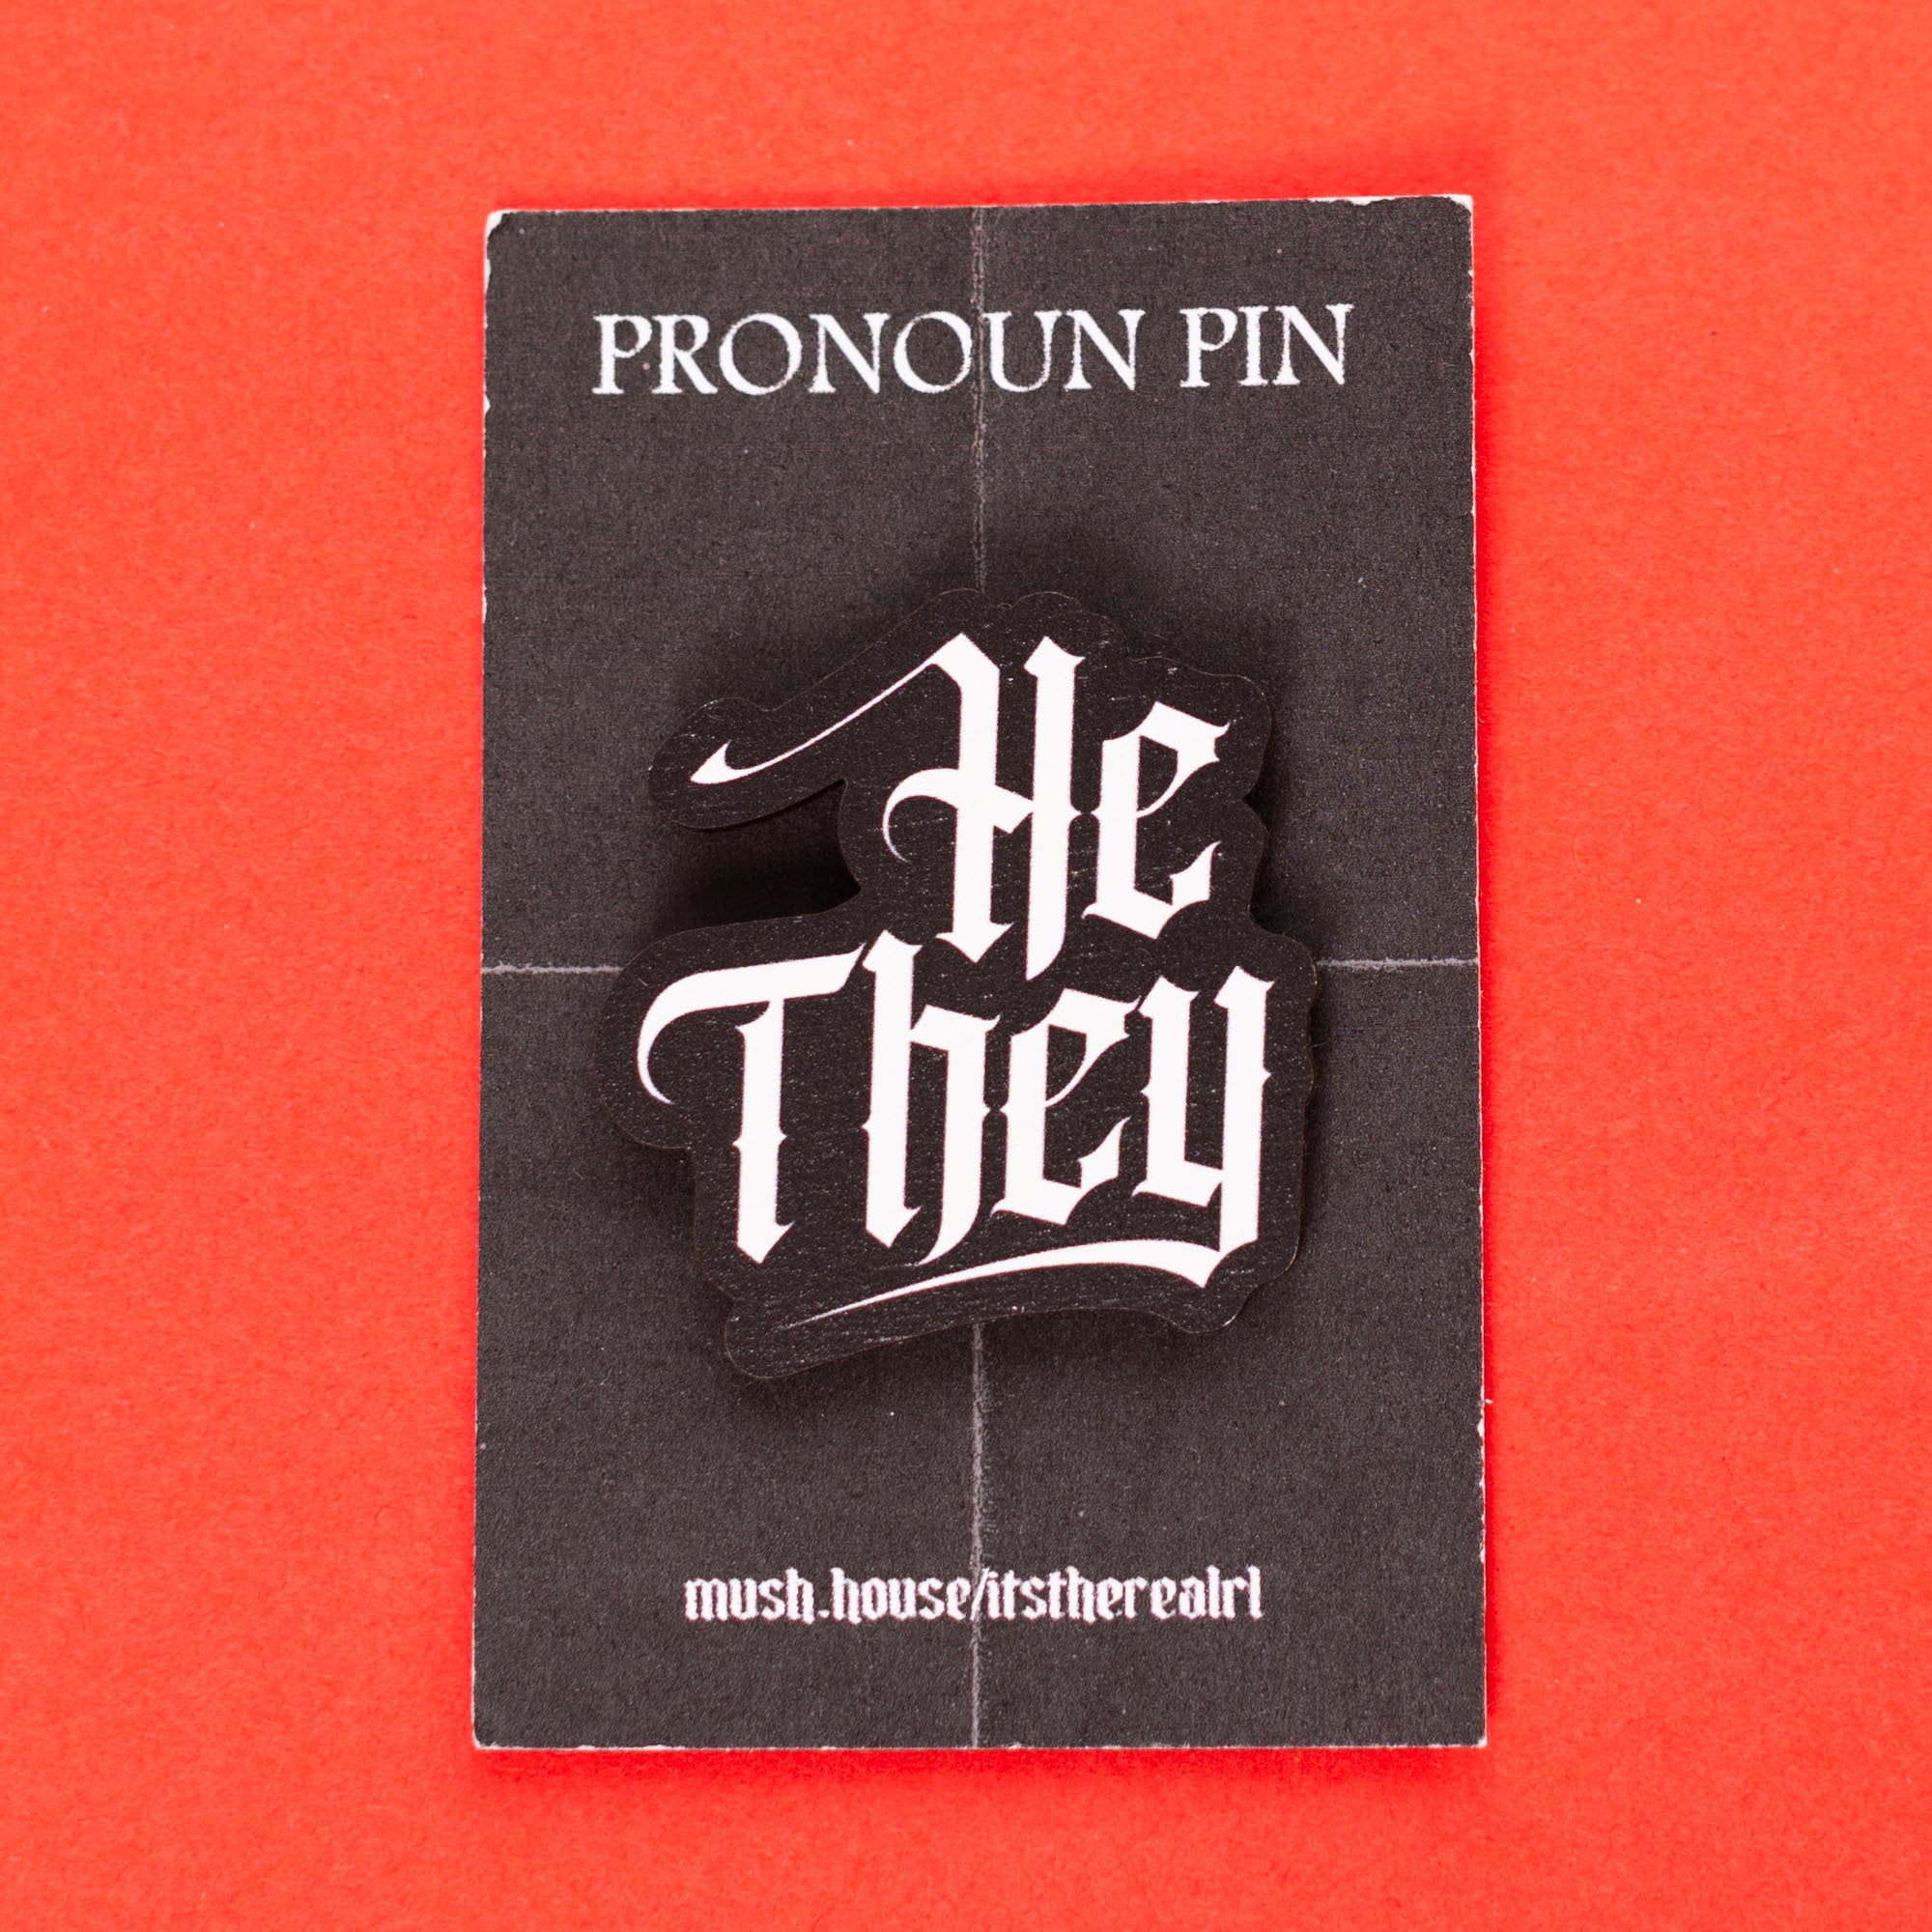 He / They Gothic Pronoun Pin